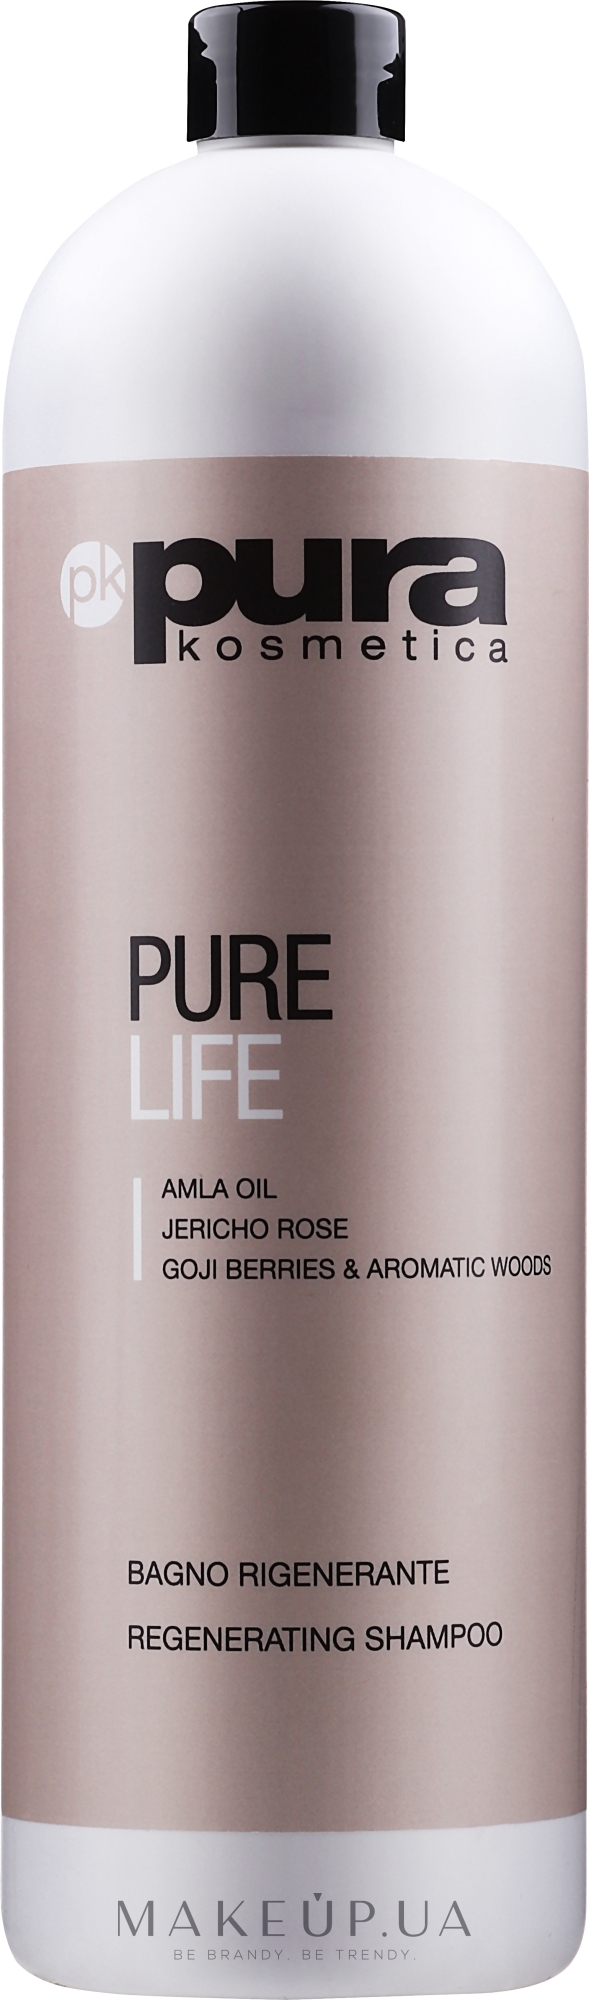 Восстанавливающий шампунь для всех типов волос - Pura Kosmetica Pure Life Regenerating Shampoo — фото 1000ml